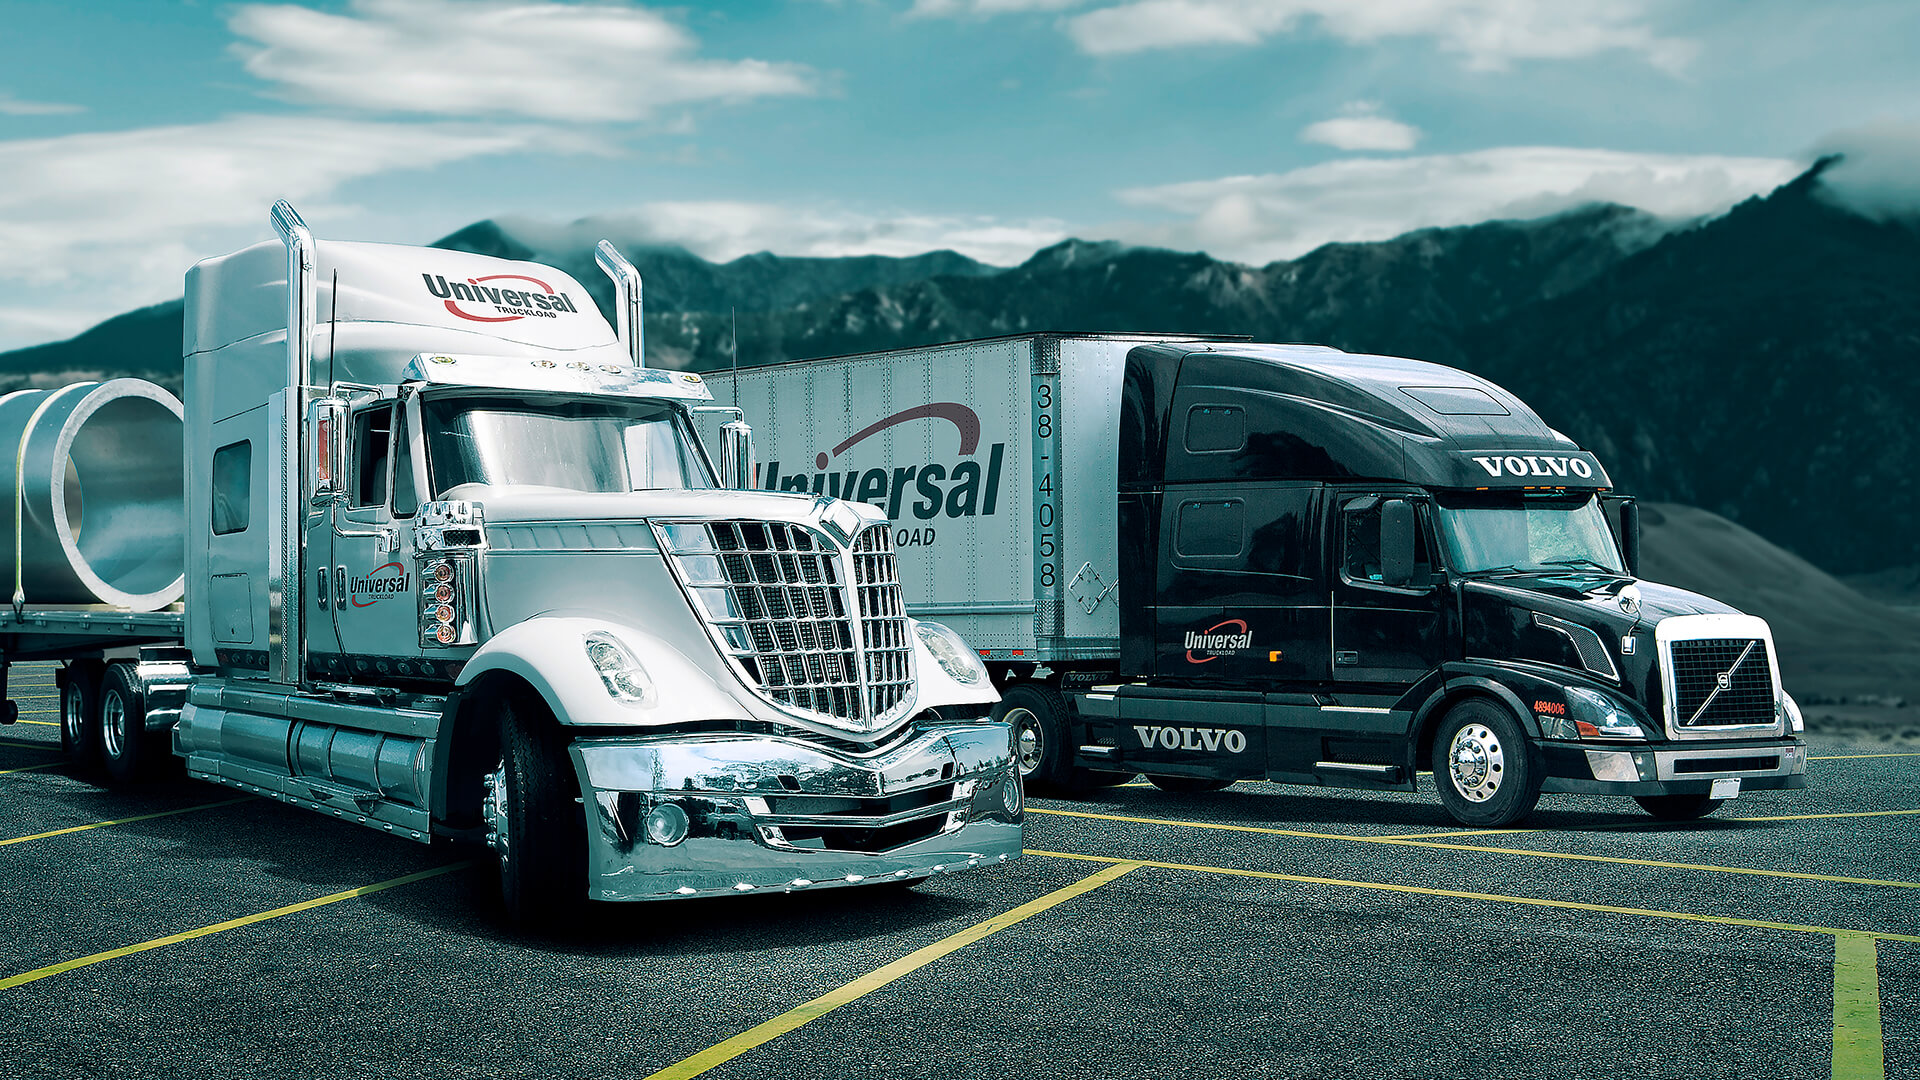 New custom photography and photo retouching of the company's fleet of trucks